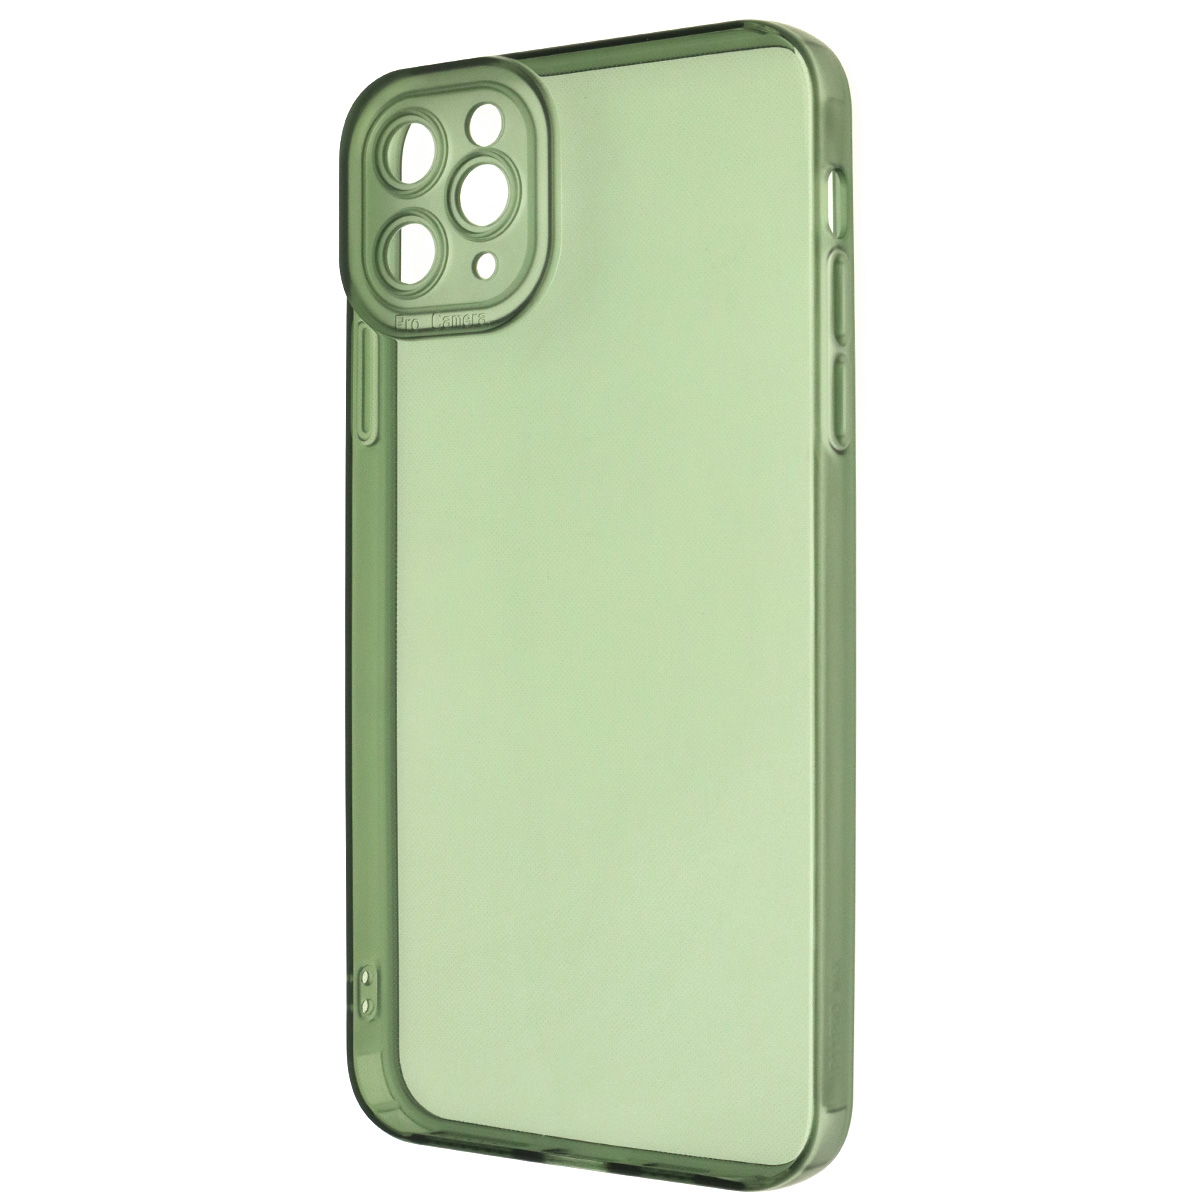 Чехол накладка CATEYES для APPLE iPhone 11 PRO MAX, защита камеры, силикон, цвет прозрачно зеленый